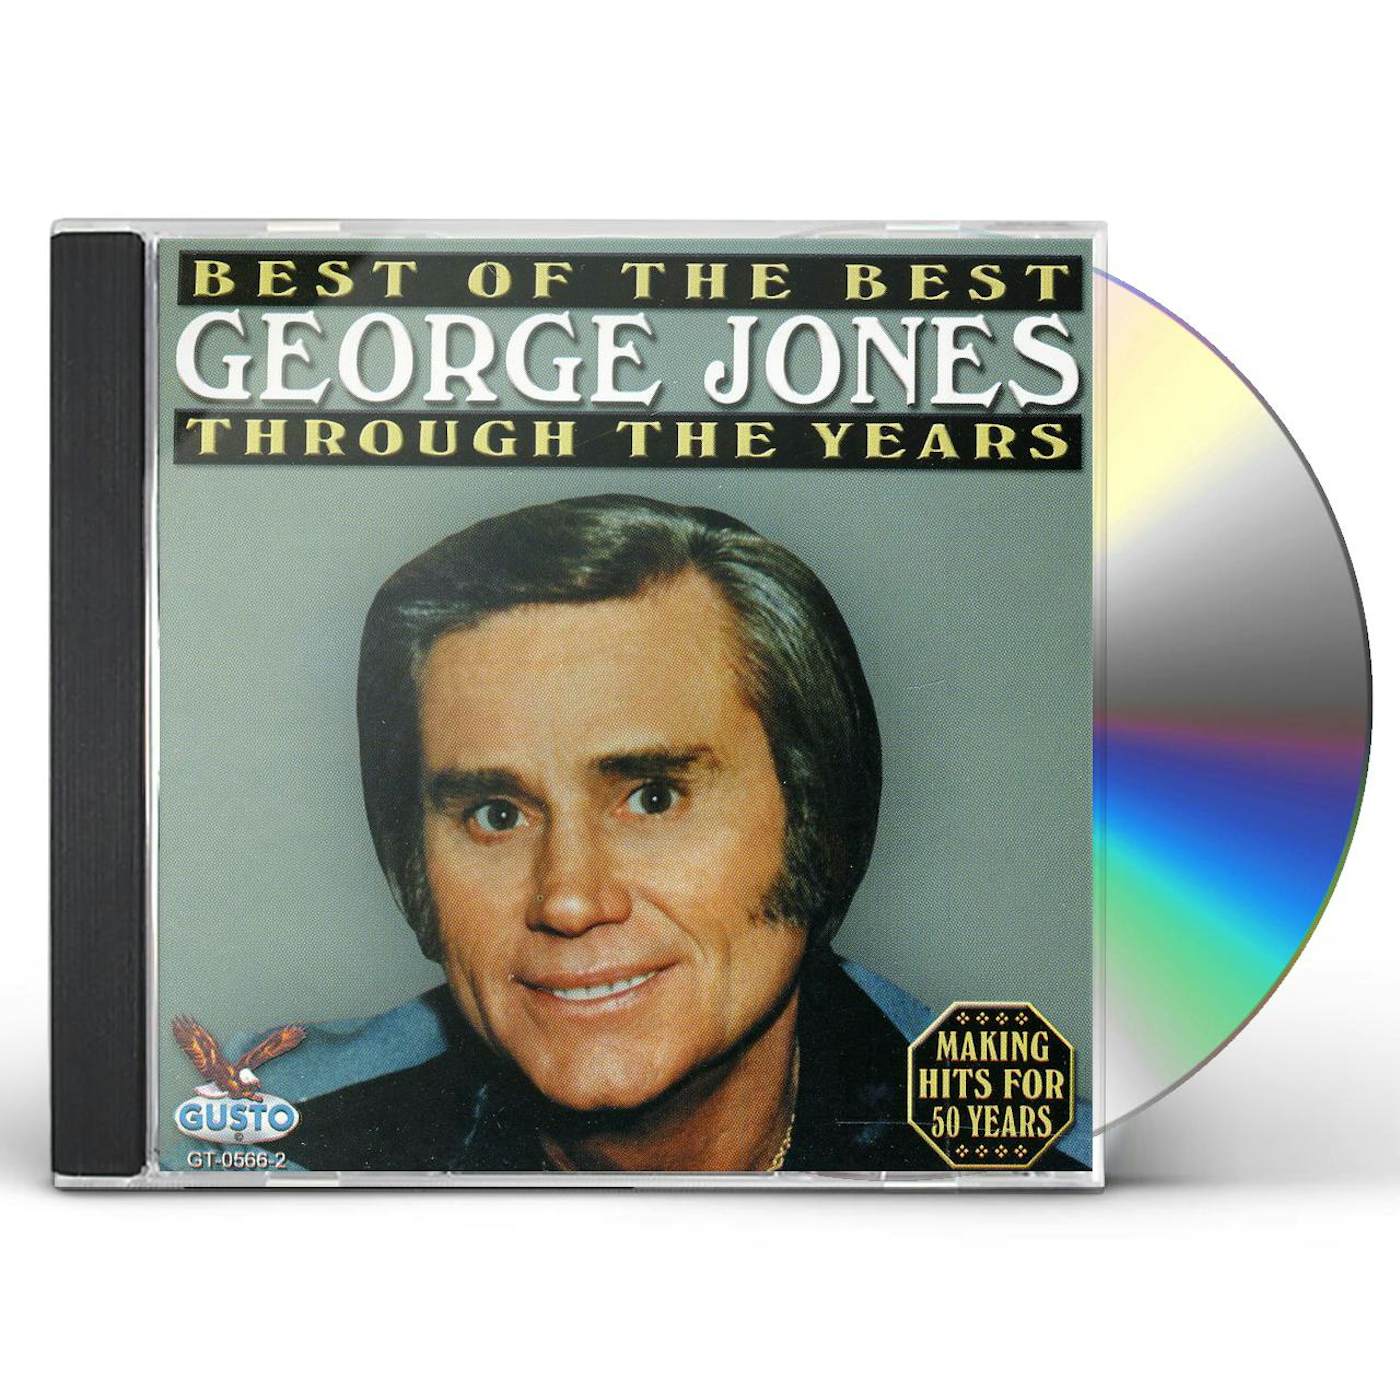 George Jones BEST THROUGH THE YEARS CD